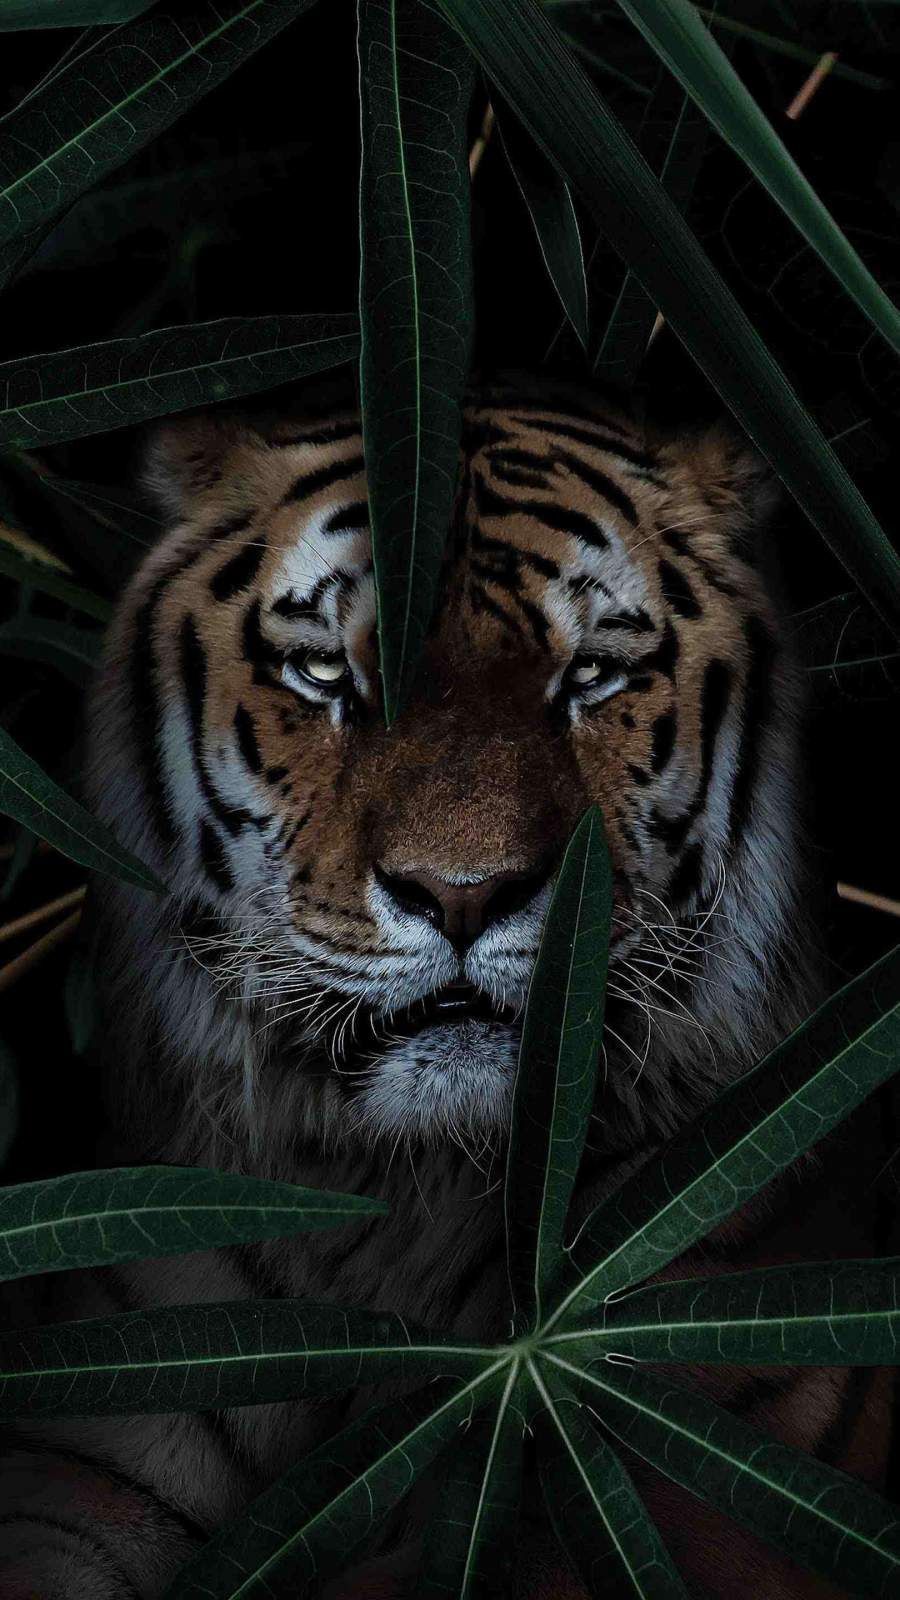 Wild Tiger Wallpaper. Tiger wallpaper iphone, Tiger wallpaper, Wild tiger